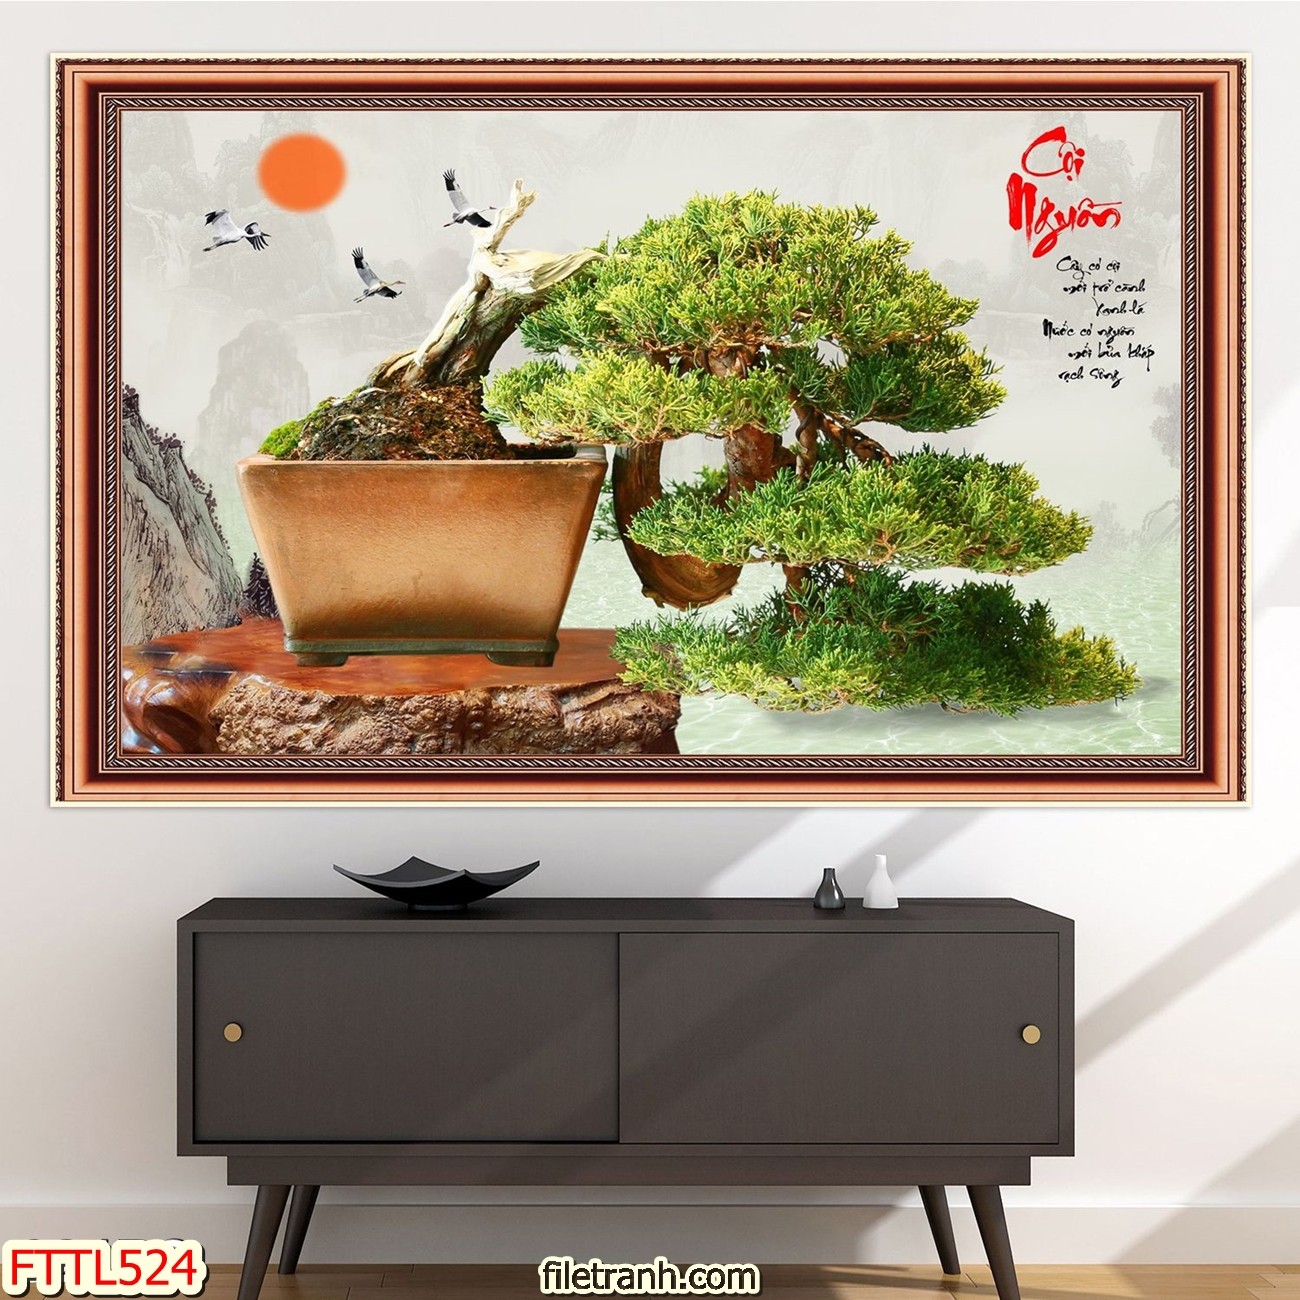 https://filetranh.com/file-tranh-chau-mai-bonsai/file-tranh-chau-mai-bonsai-fttl524.html